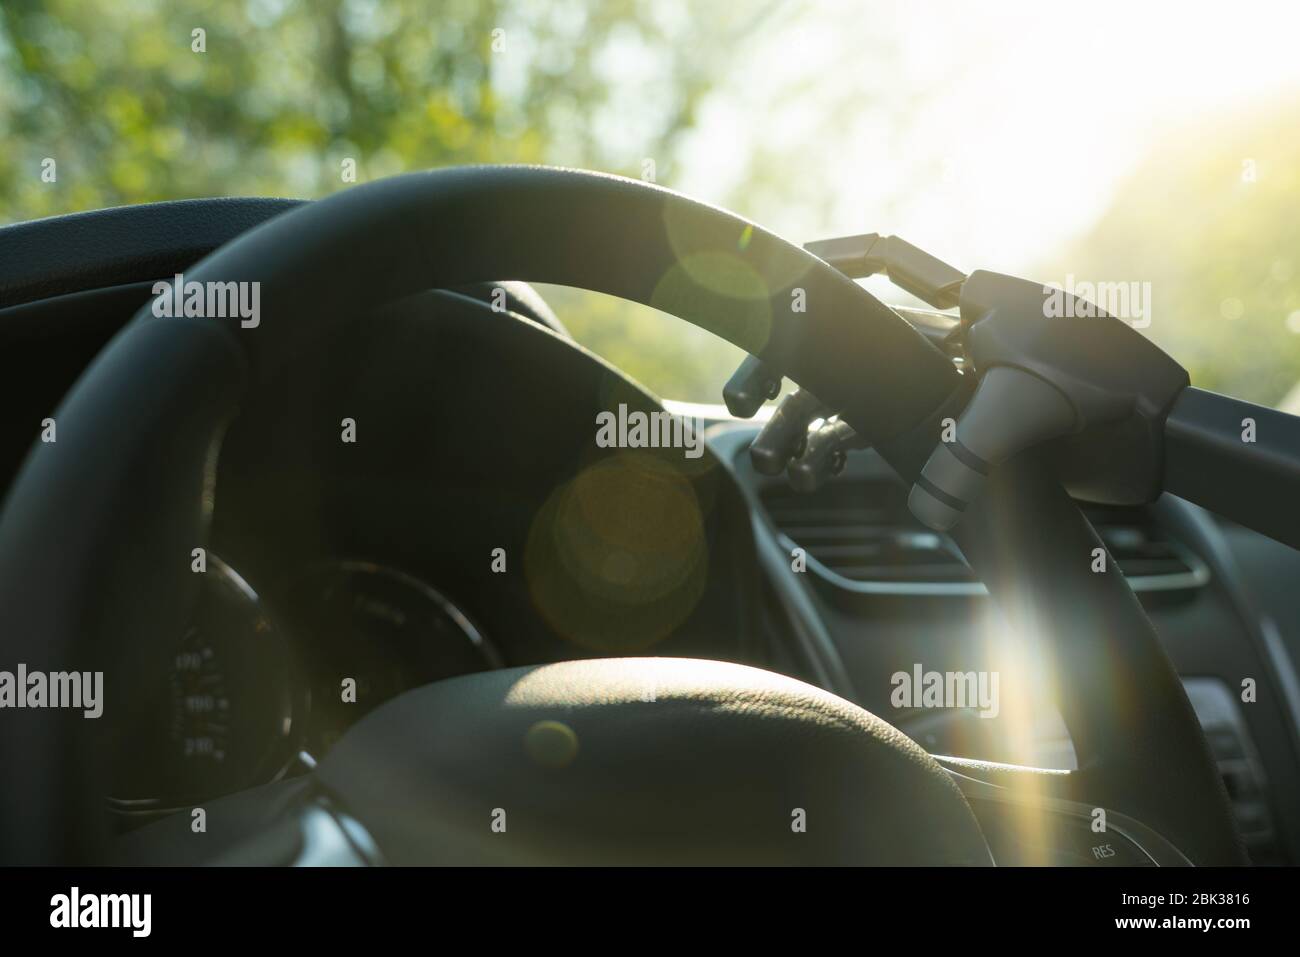 Robot arm on a steering wheel. Artificial intelligence drives a car. Autonomous vehicle concept. Stock Photo